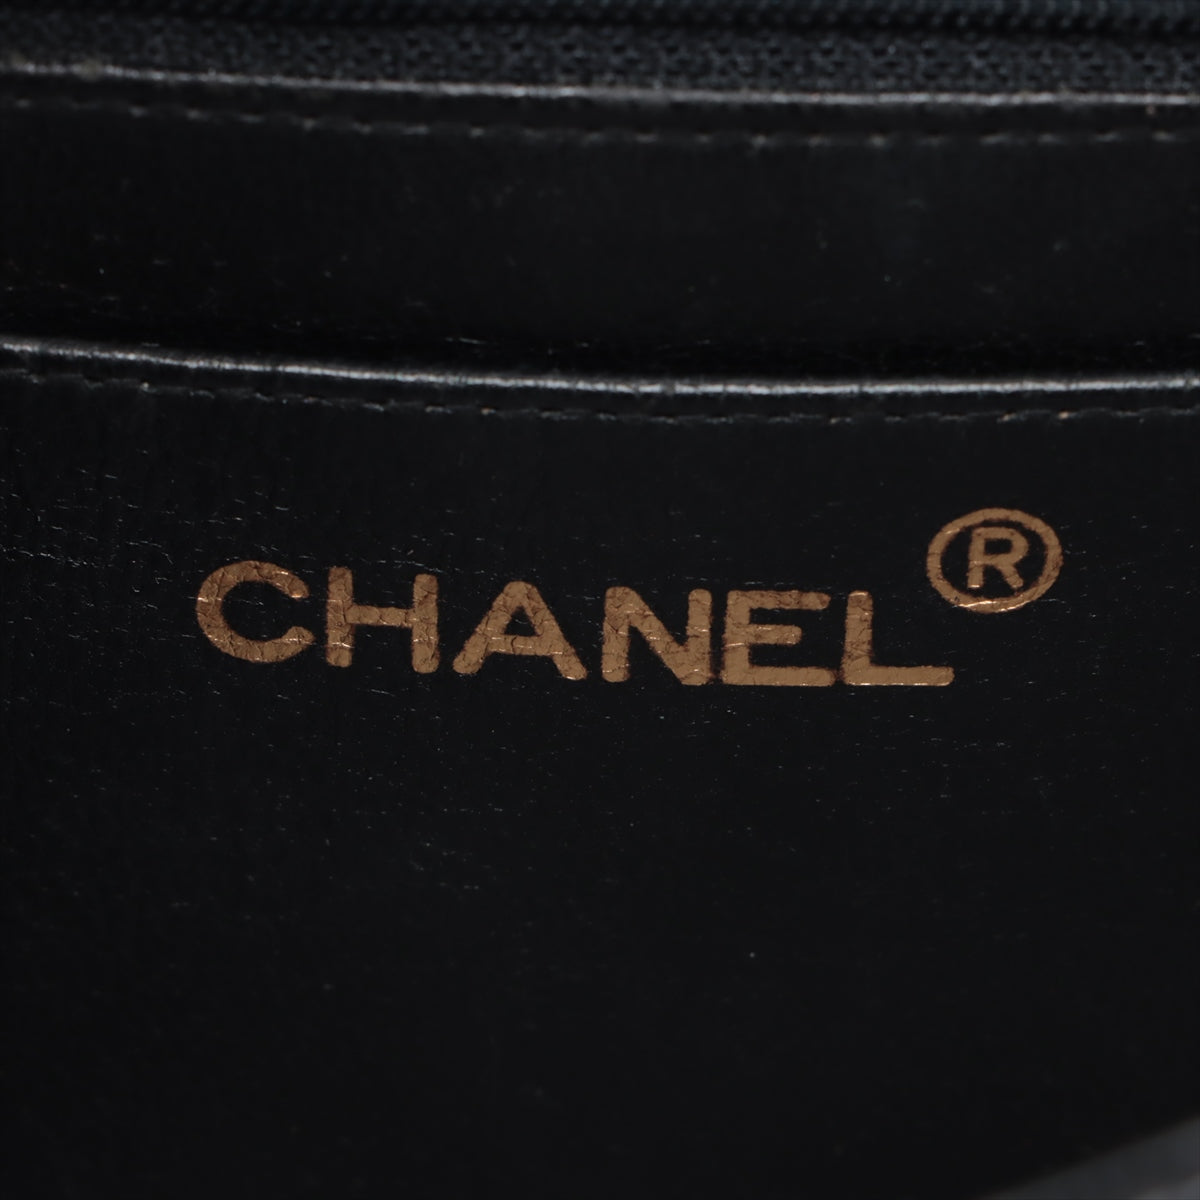 Chanel Matrasse Caviar S Single Chain Bag Diamond Flap Black G  3rd